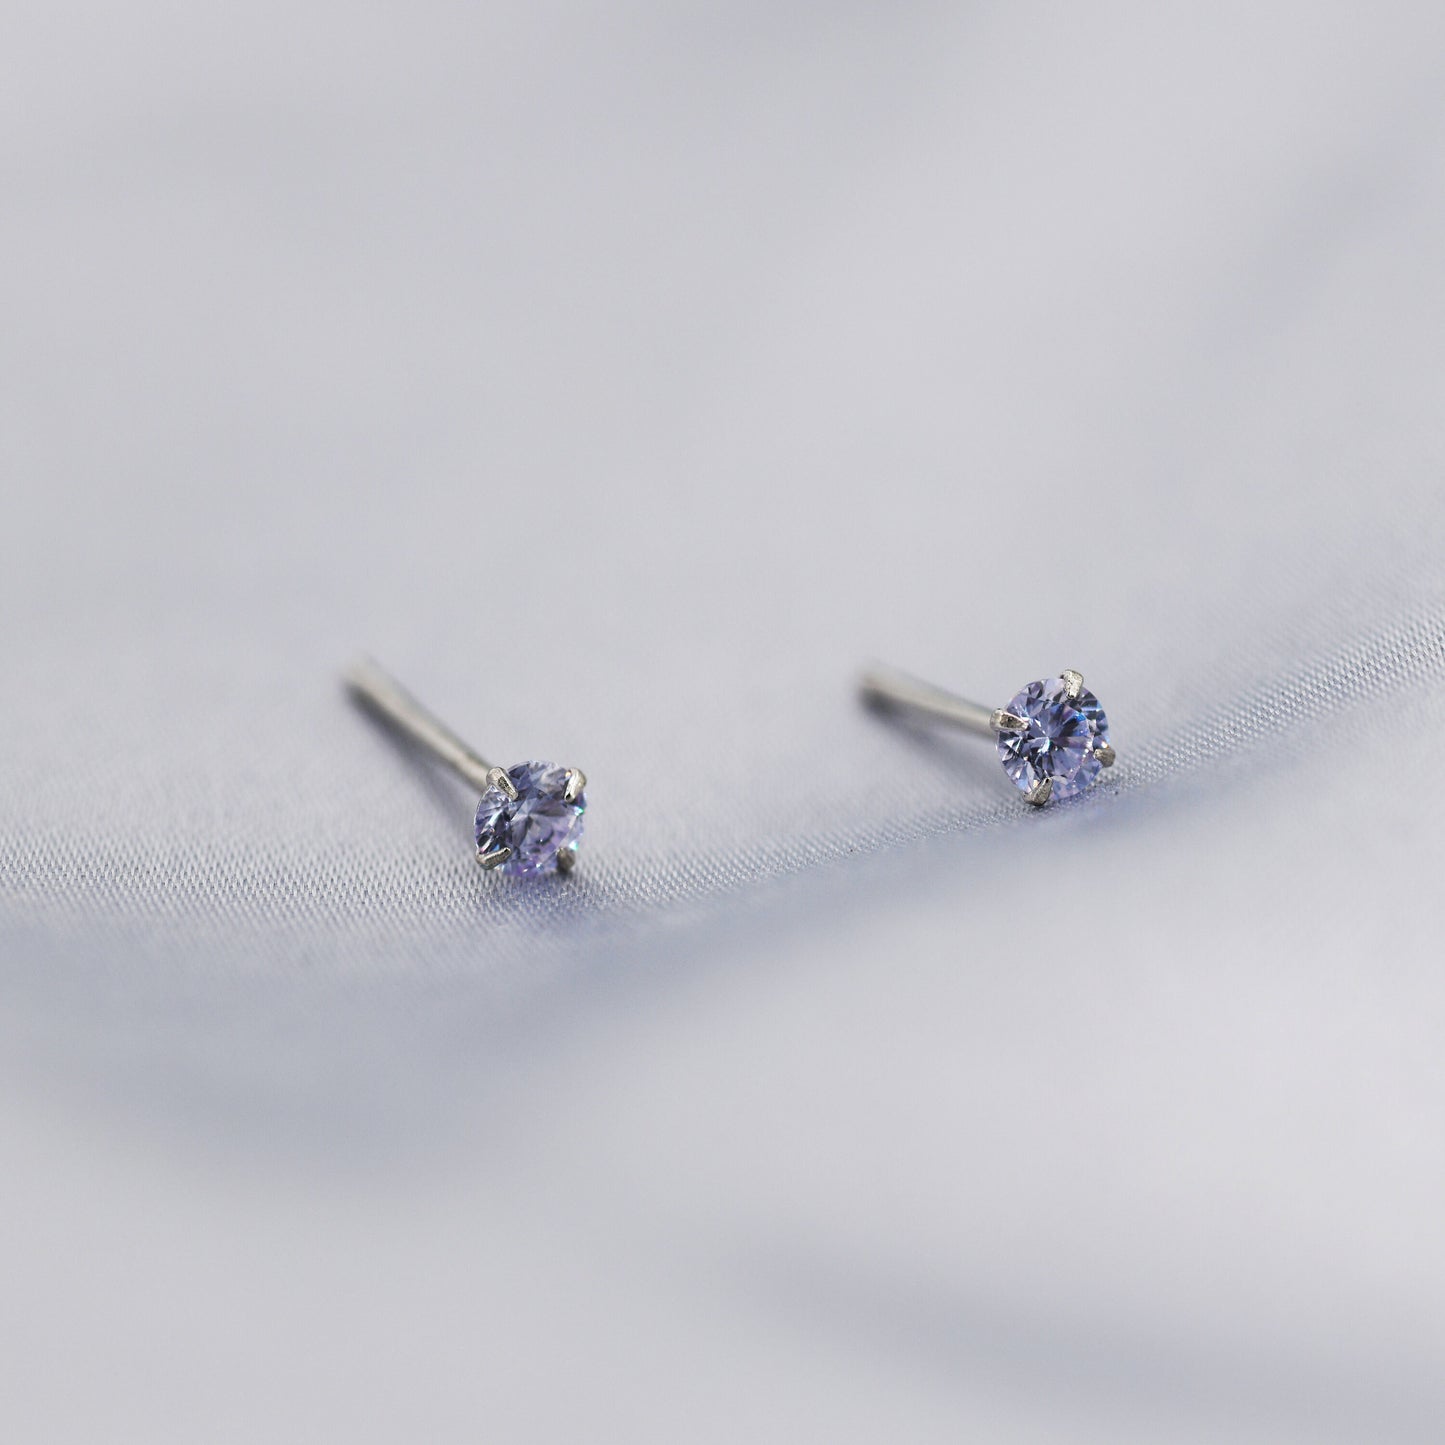 June Birthstone Earrings, Alexandrite Stud Earrings in Sterling Silver, Extra Tiny Crystal Stud, 3mm Birthstone CZ Earrings